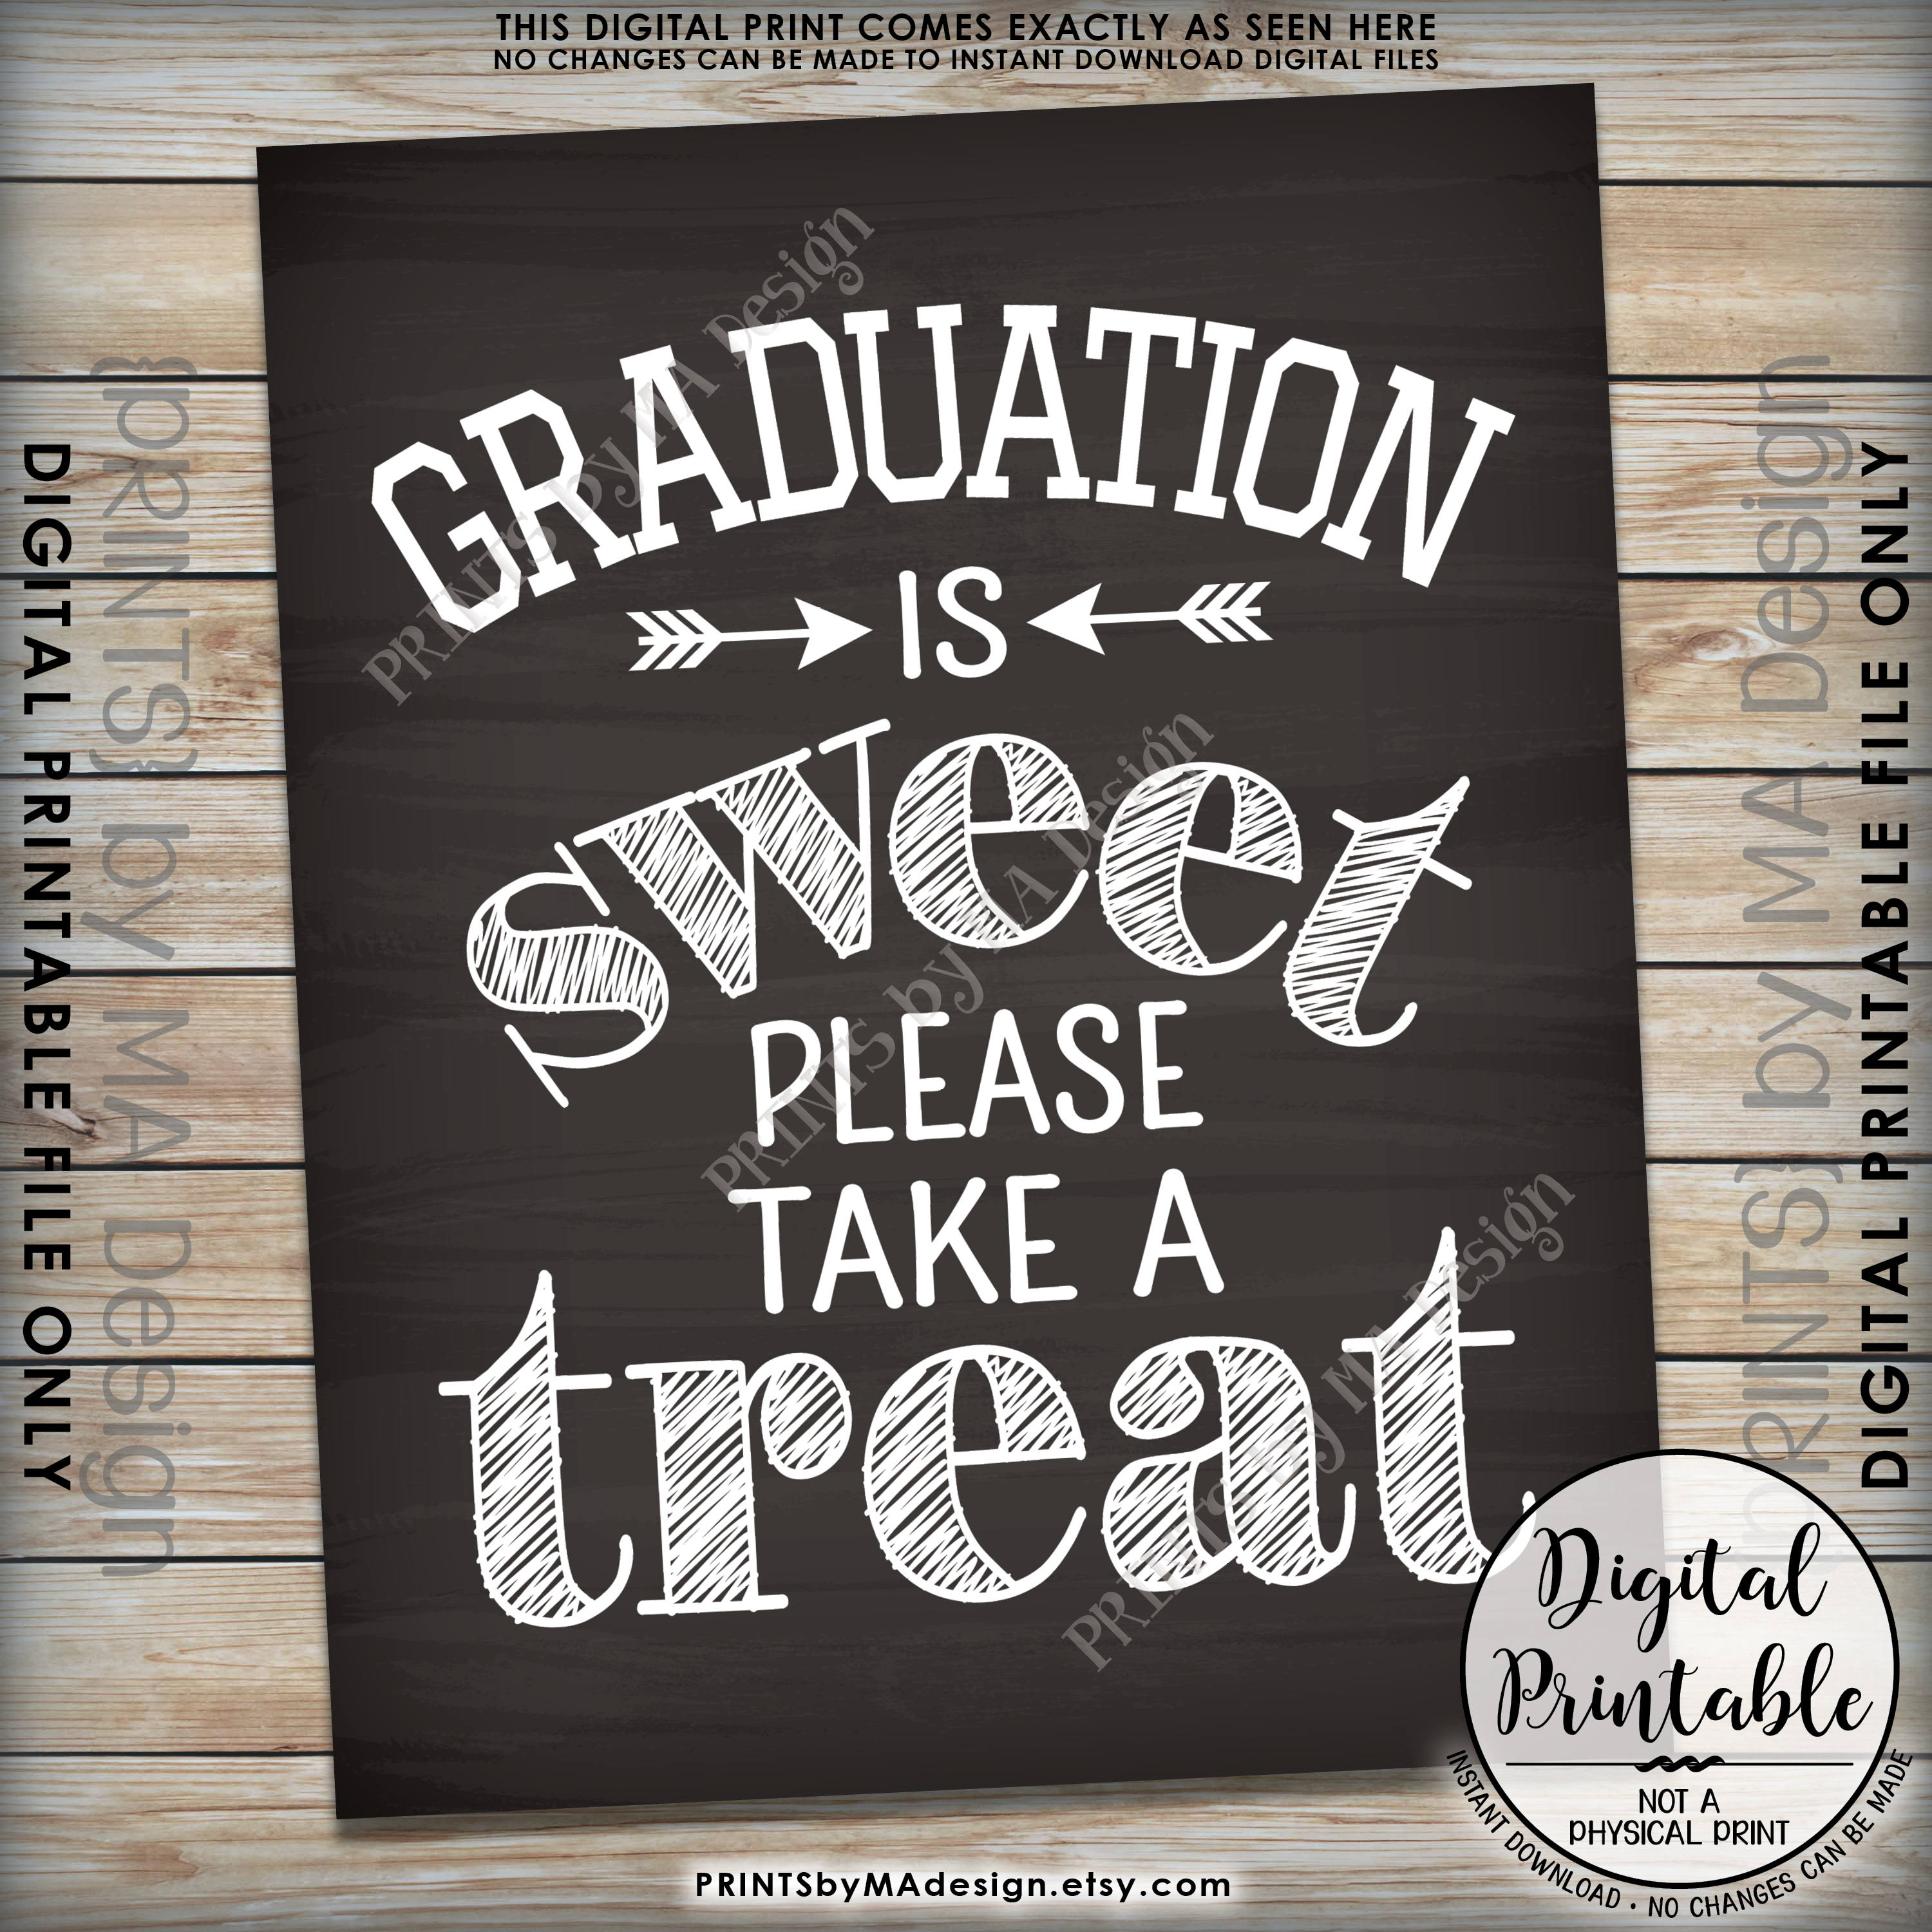 Graduation Party Decoration, Graduation is Sweet Please Take a Treat, Graduation Sign, 8x10